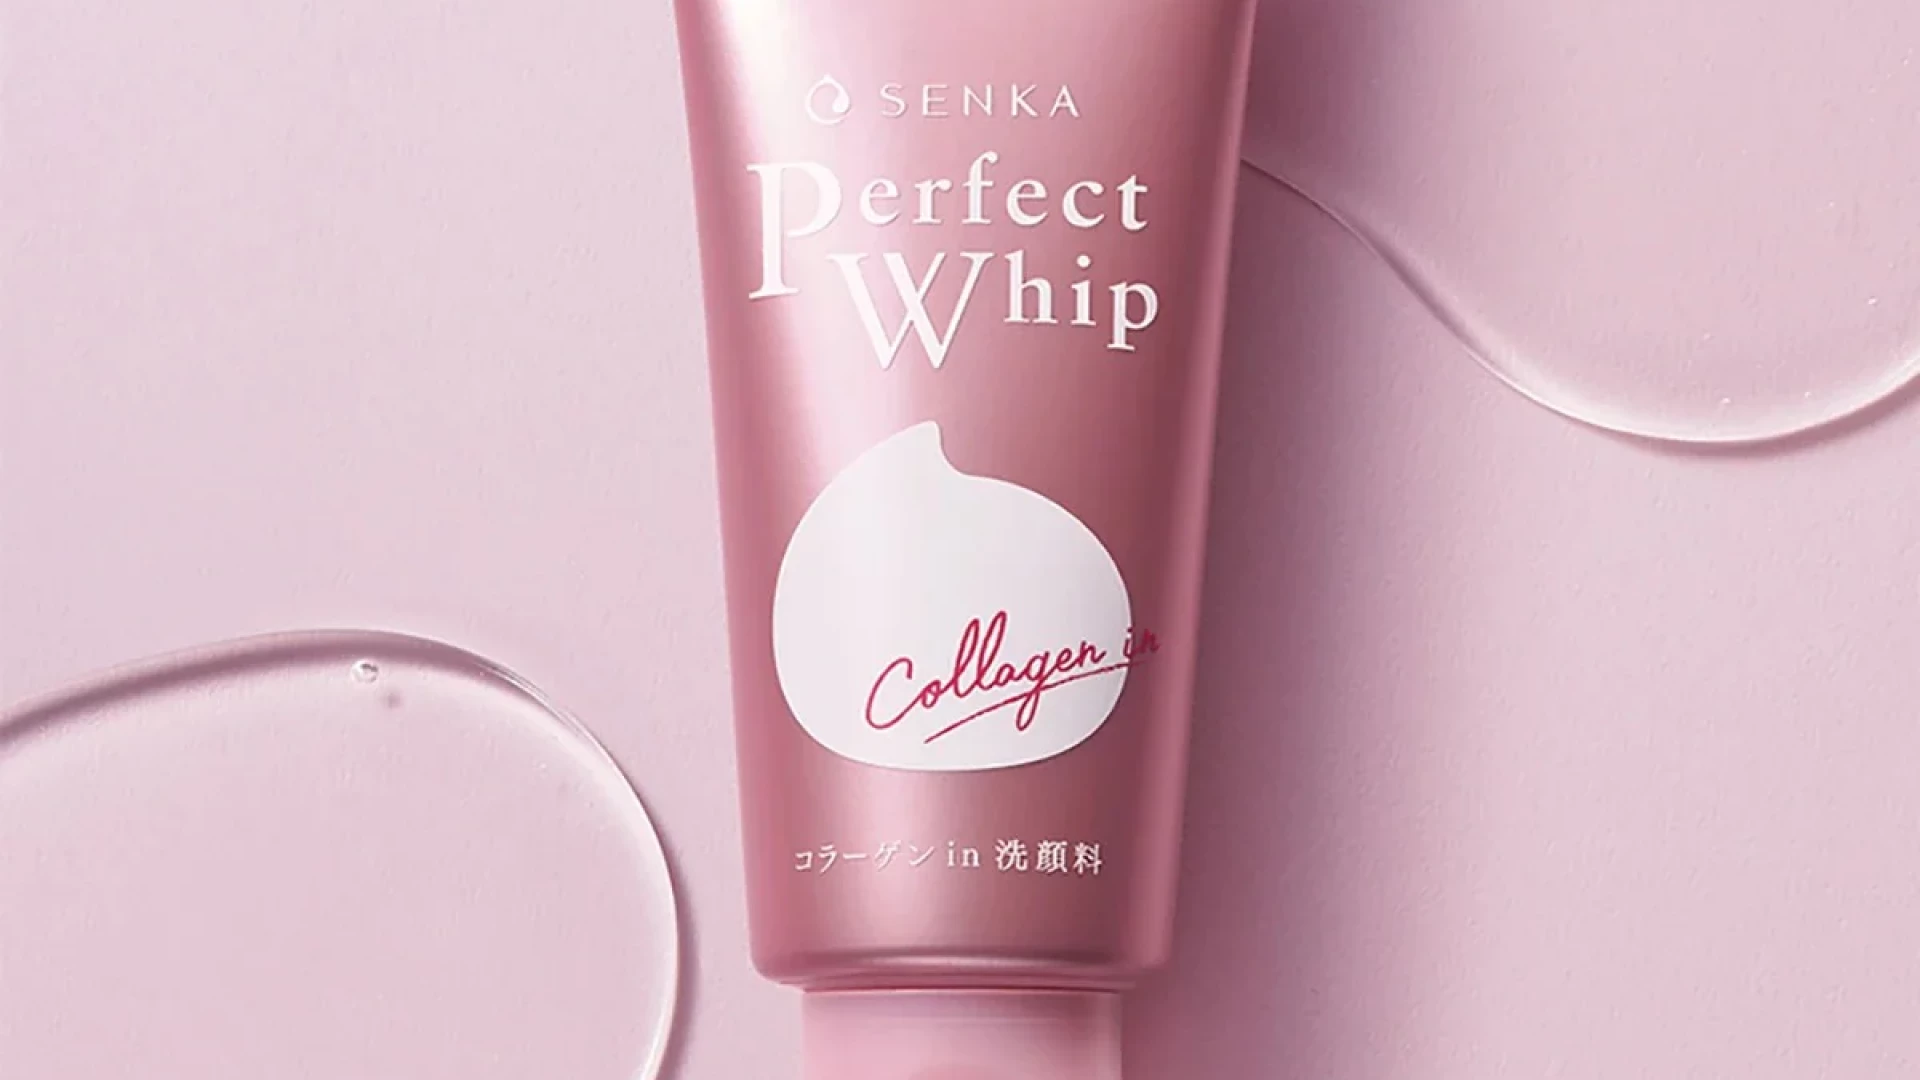 Shiseido Пенка с коллагеном Perfect Foam Whip